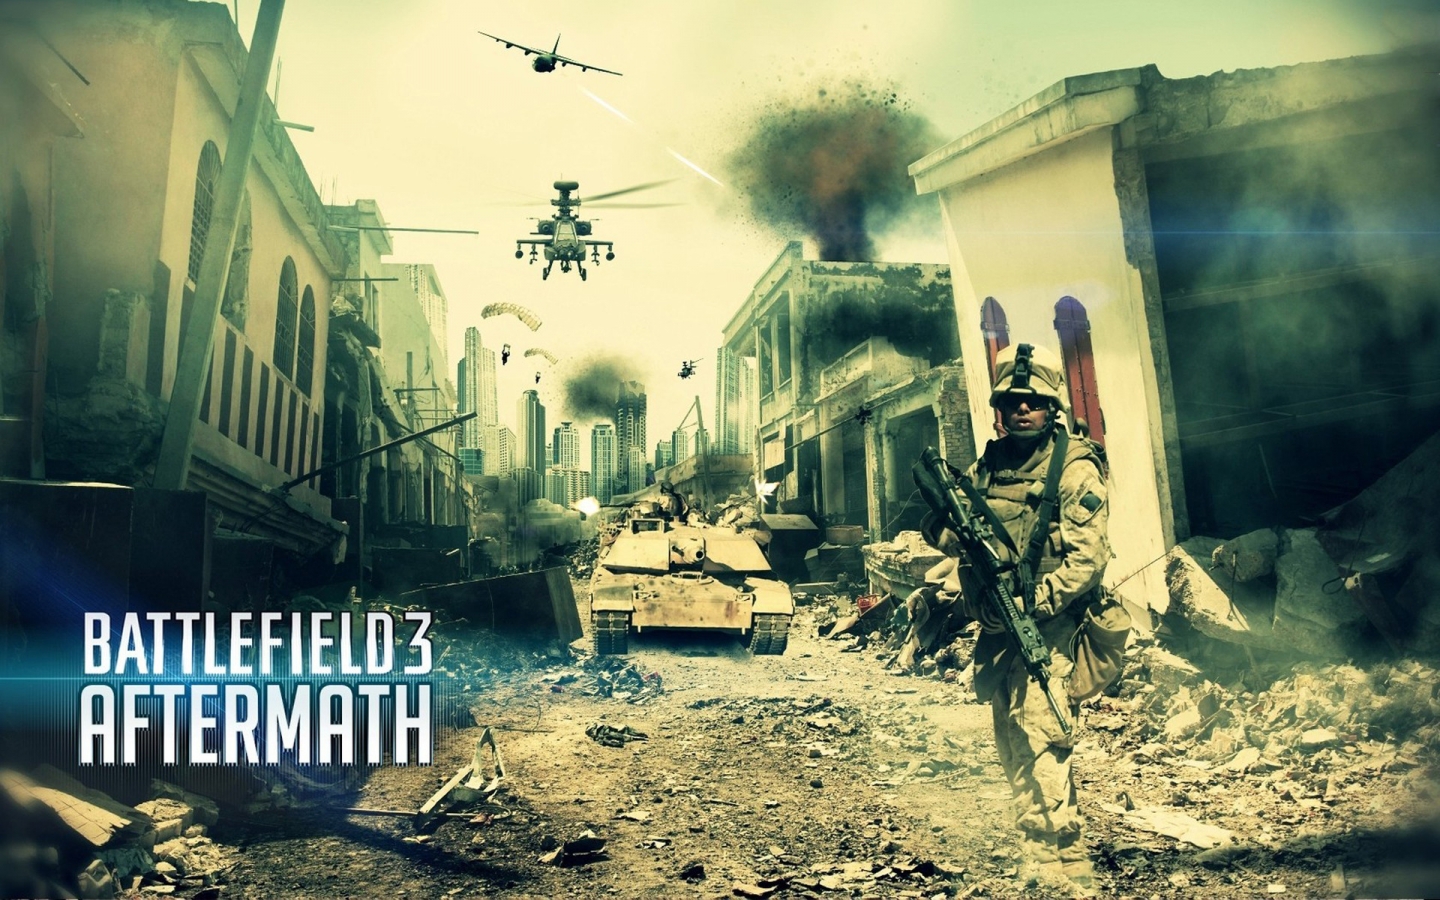 Battlefield 3 Aftermath for 1440 x 900 widescreen resolution